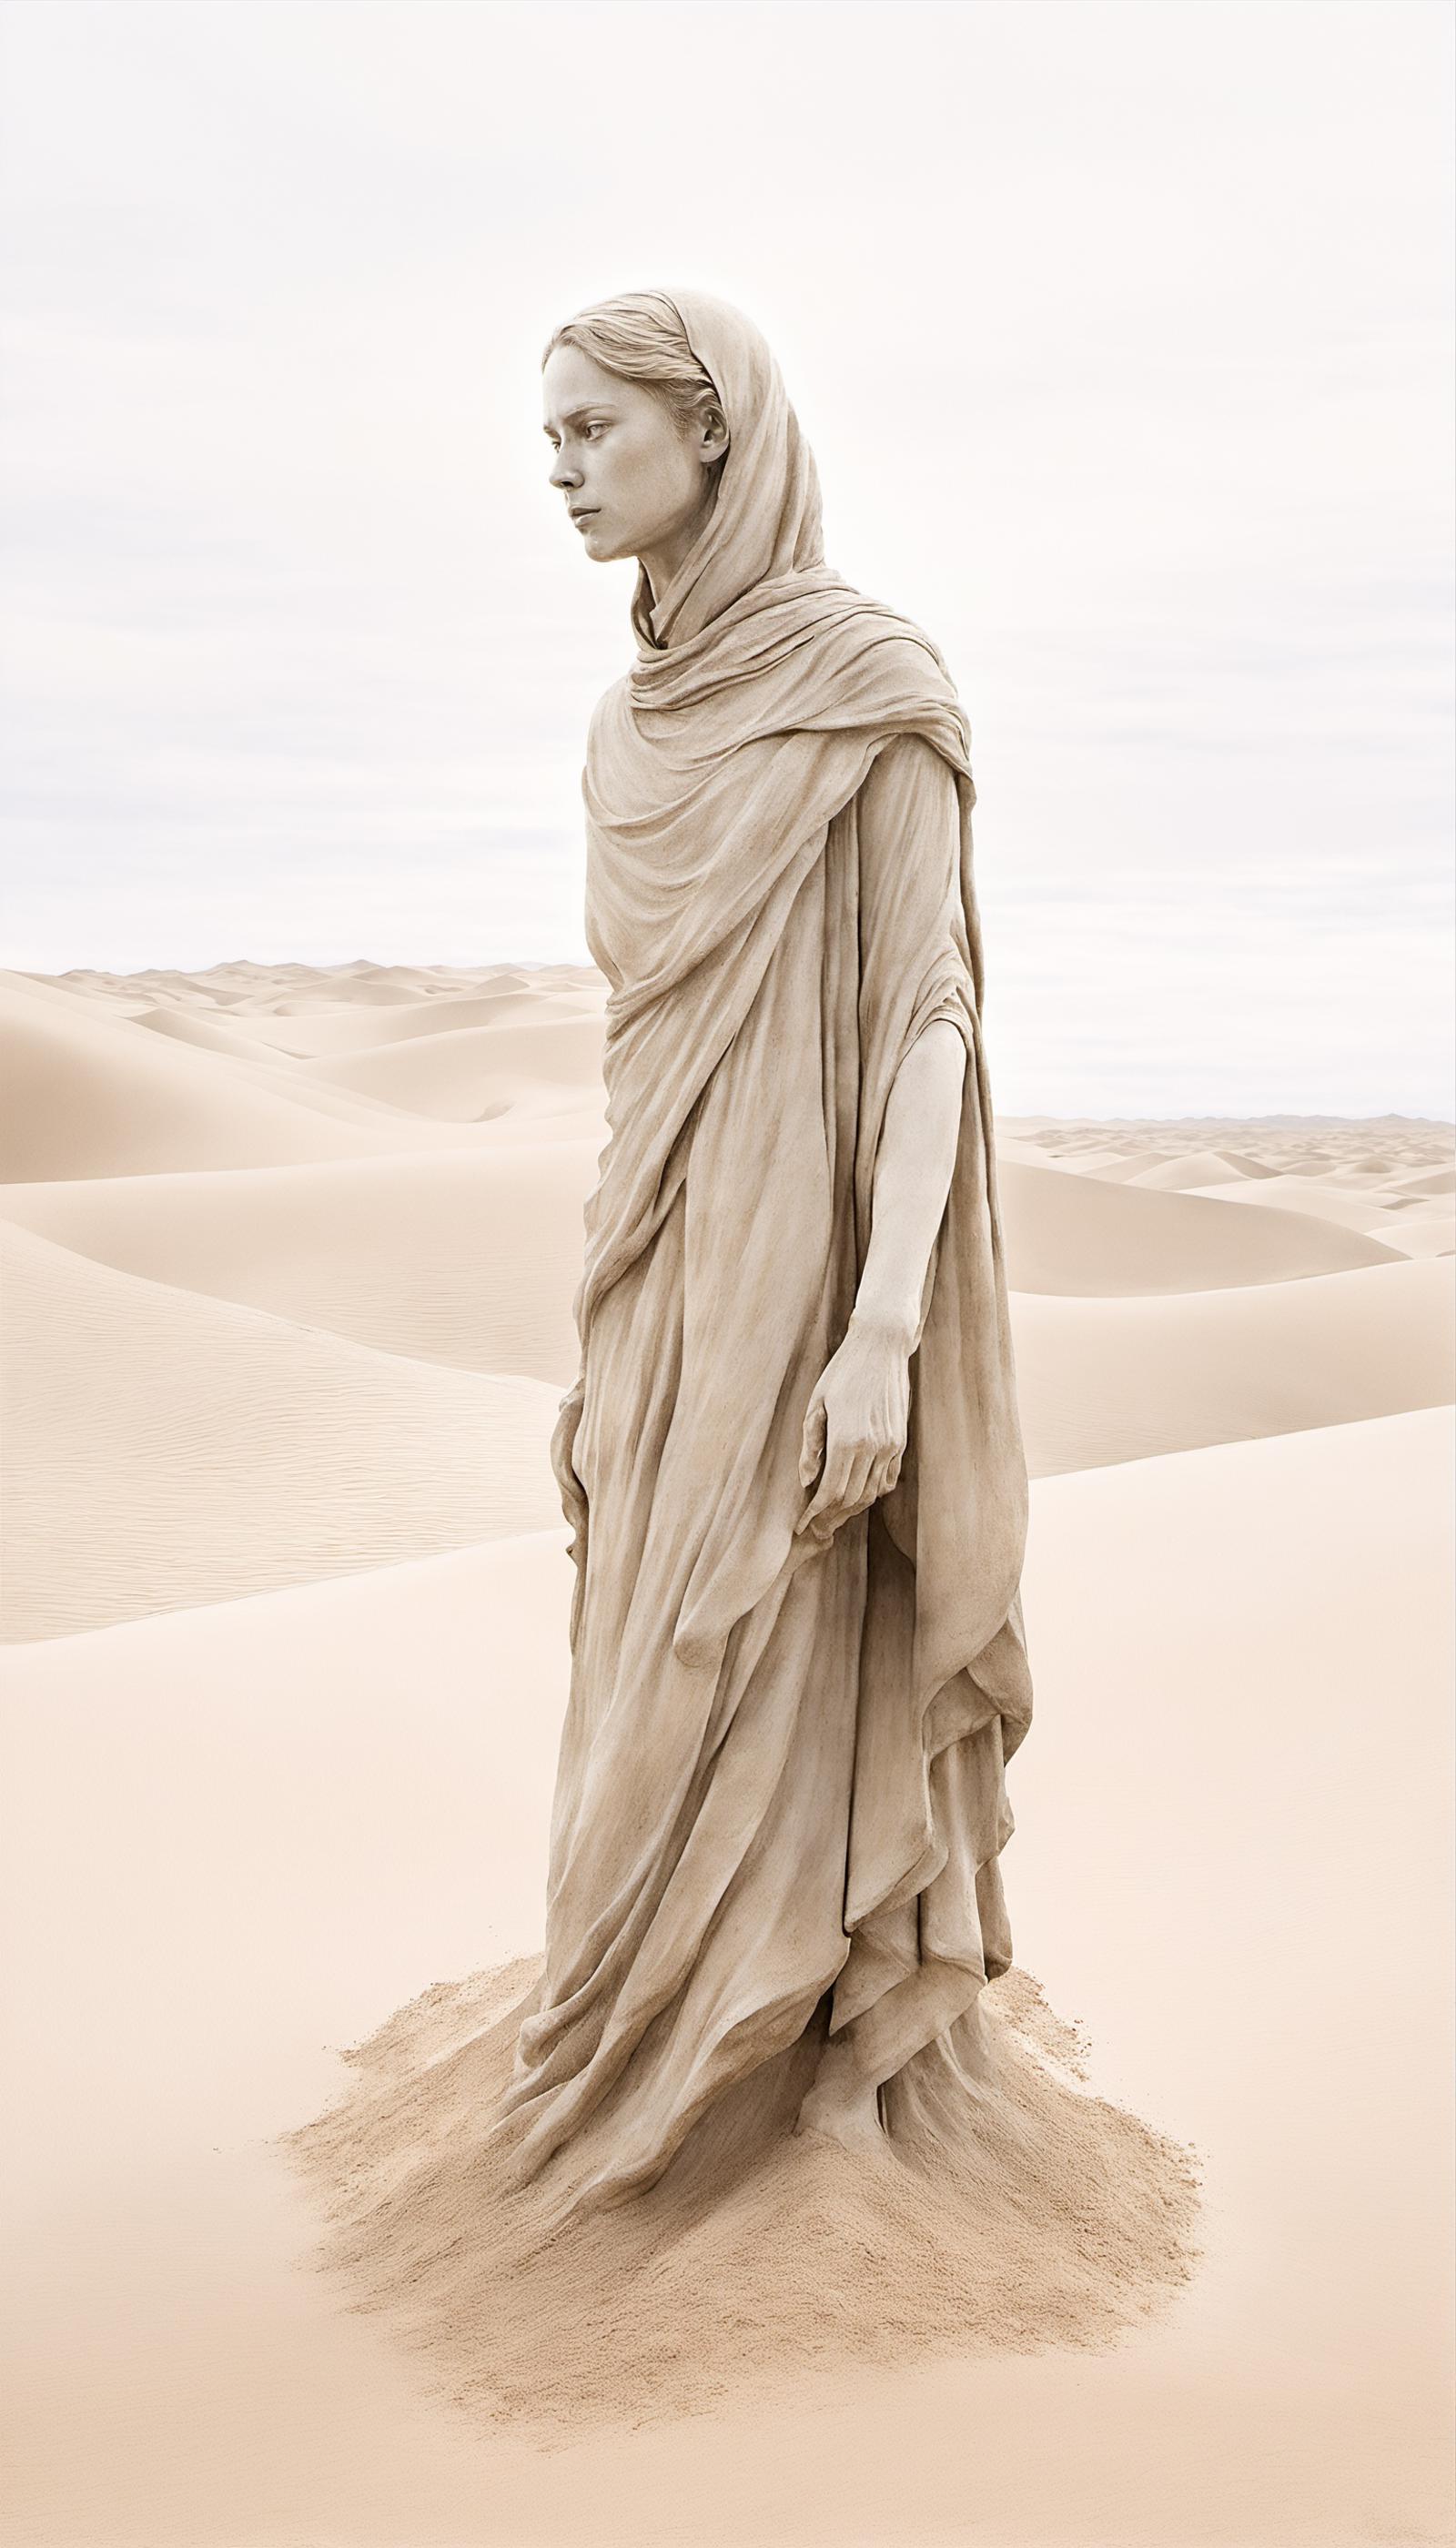 A statue of a man in a desert landscape.